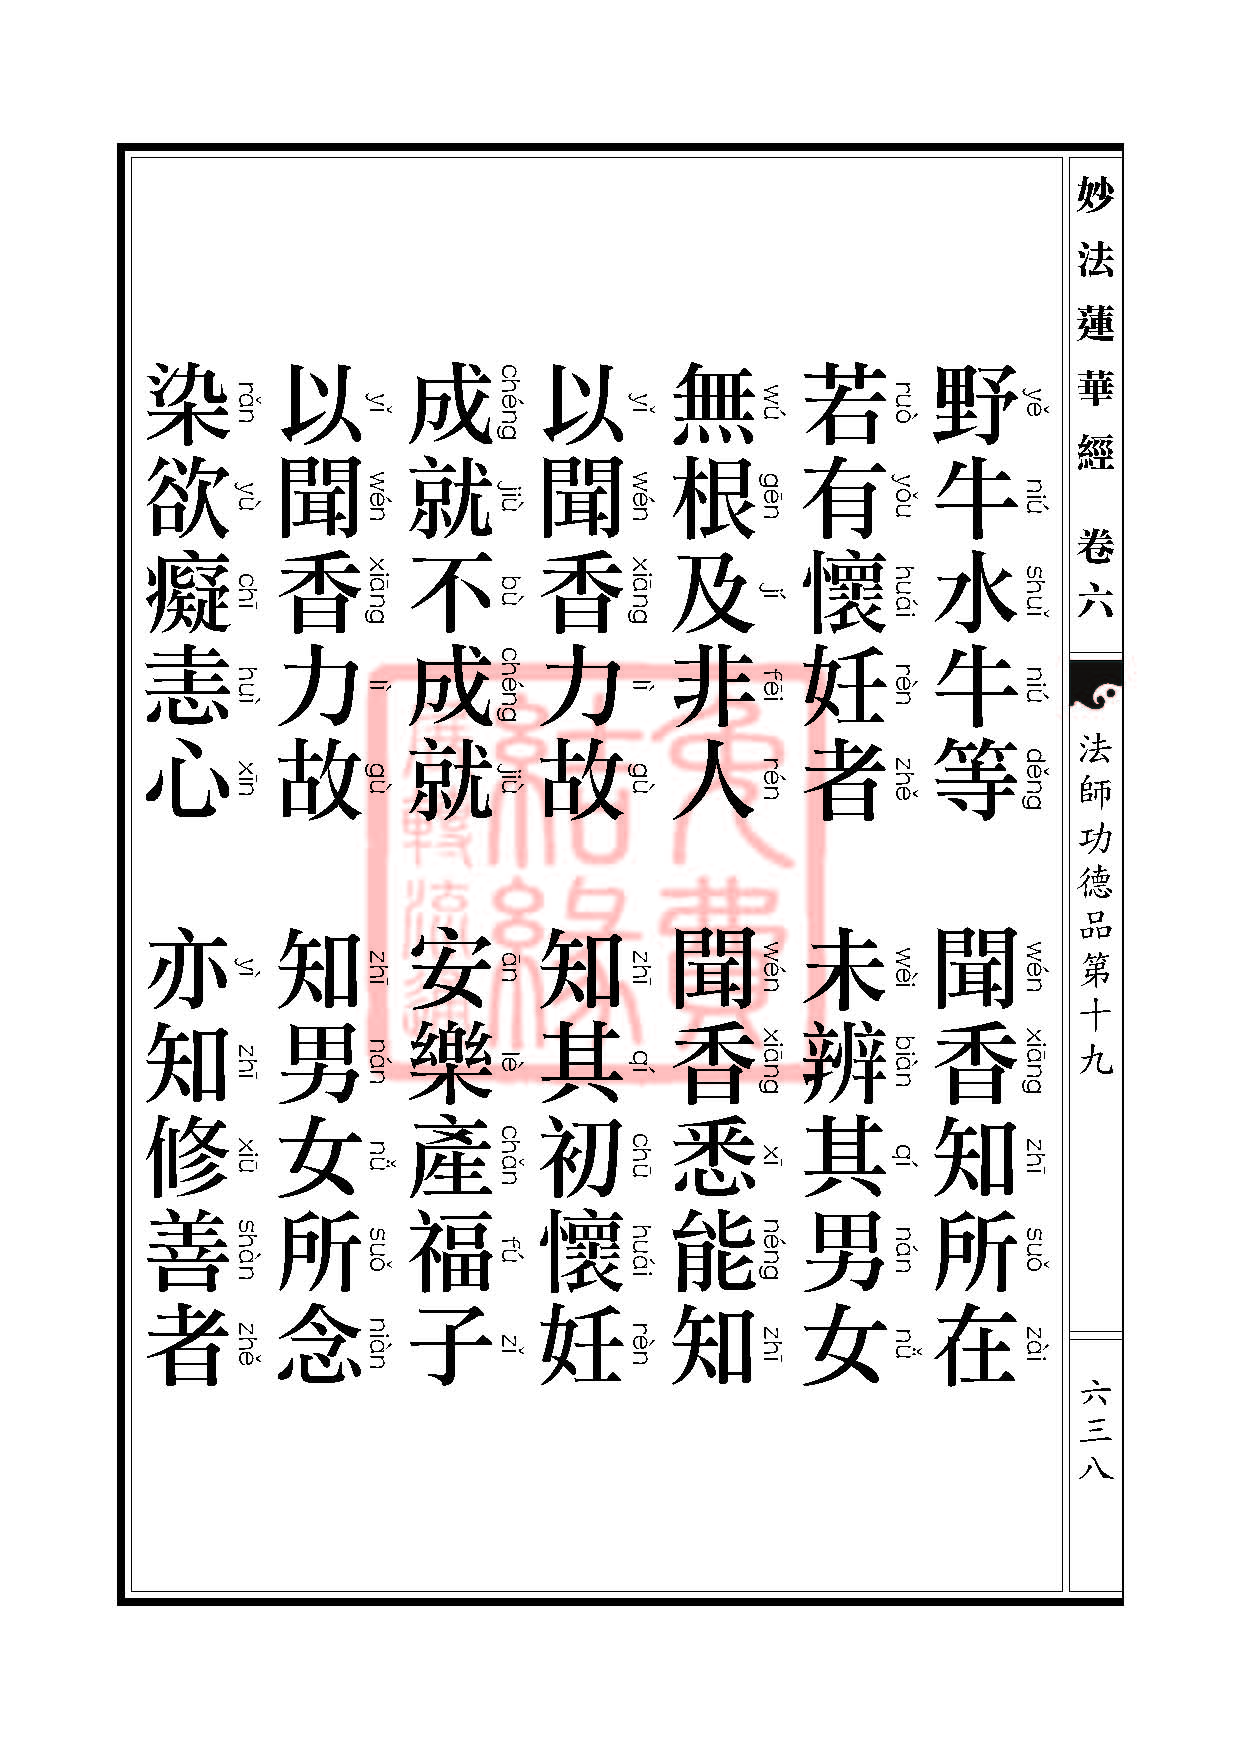 Book_FHJ_HK-A6-PY_Web_页面_638.jpg